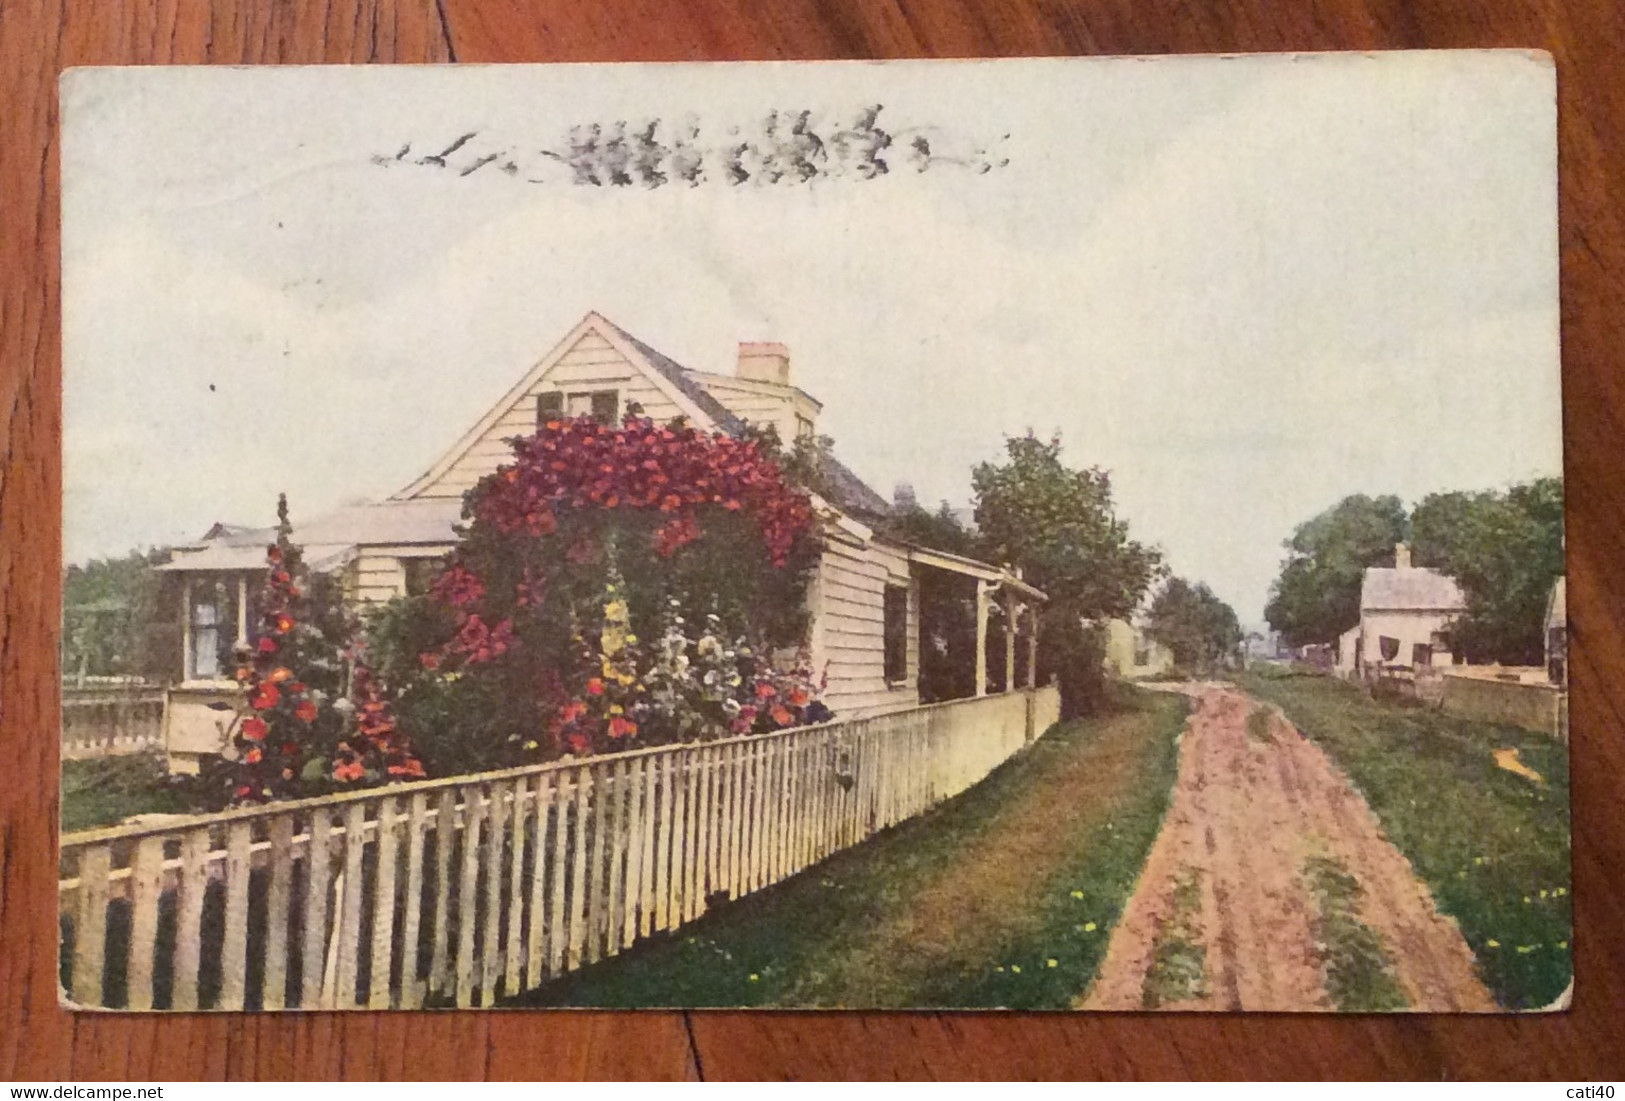 USA -  COTTAGE  AT NANTUCKET  - VINTAGE POST CARD JUL 13 1910 - Fall River